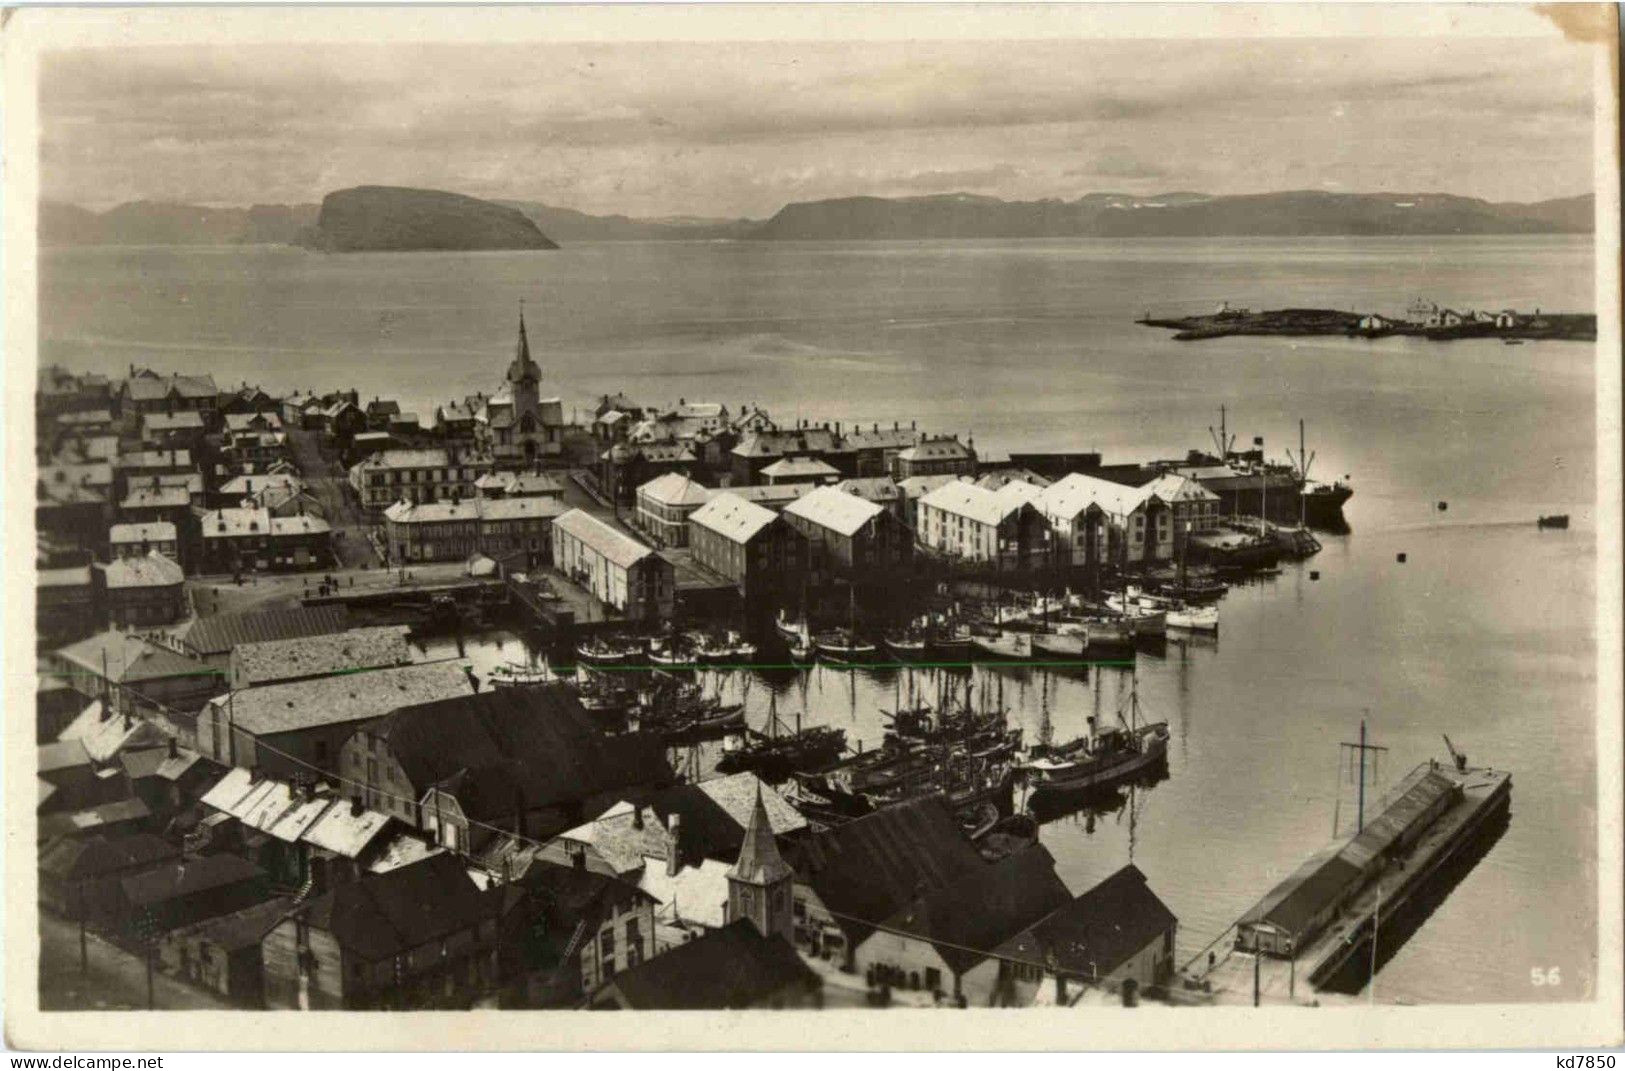 Hammerfest - Norwegen